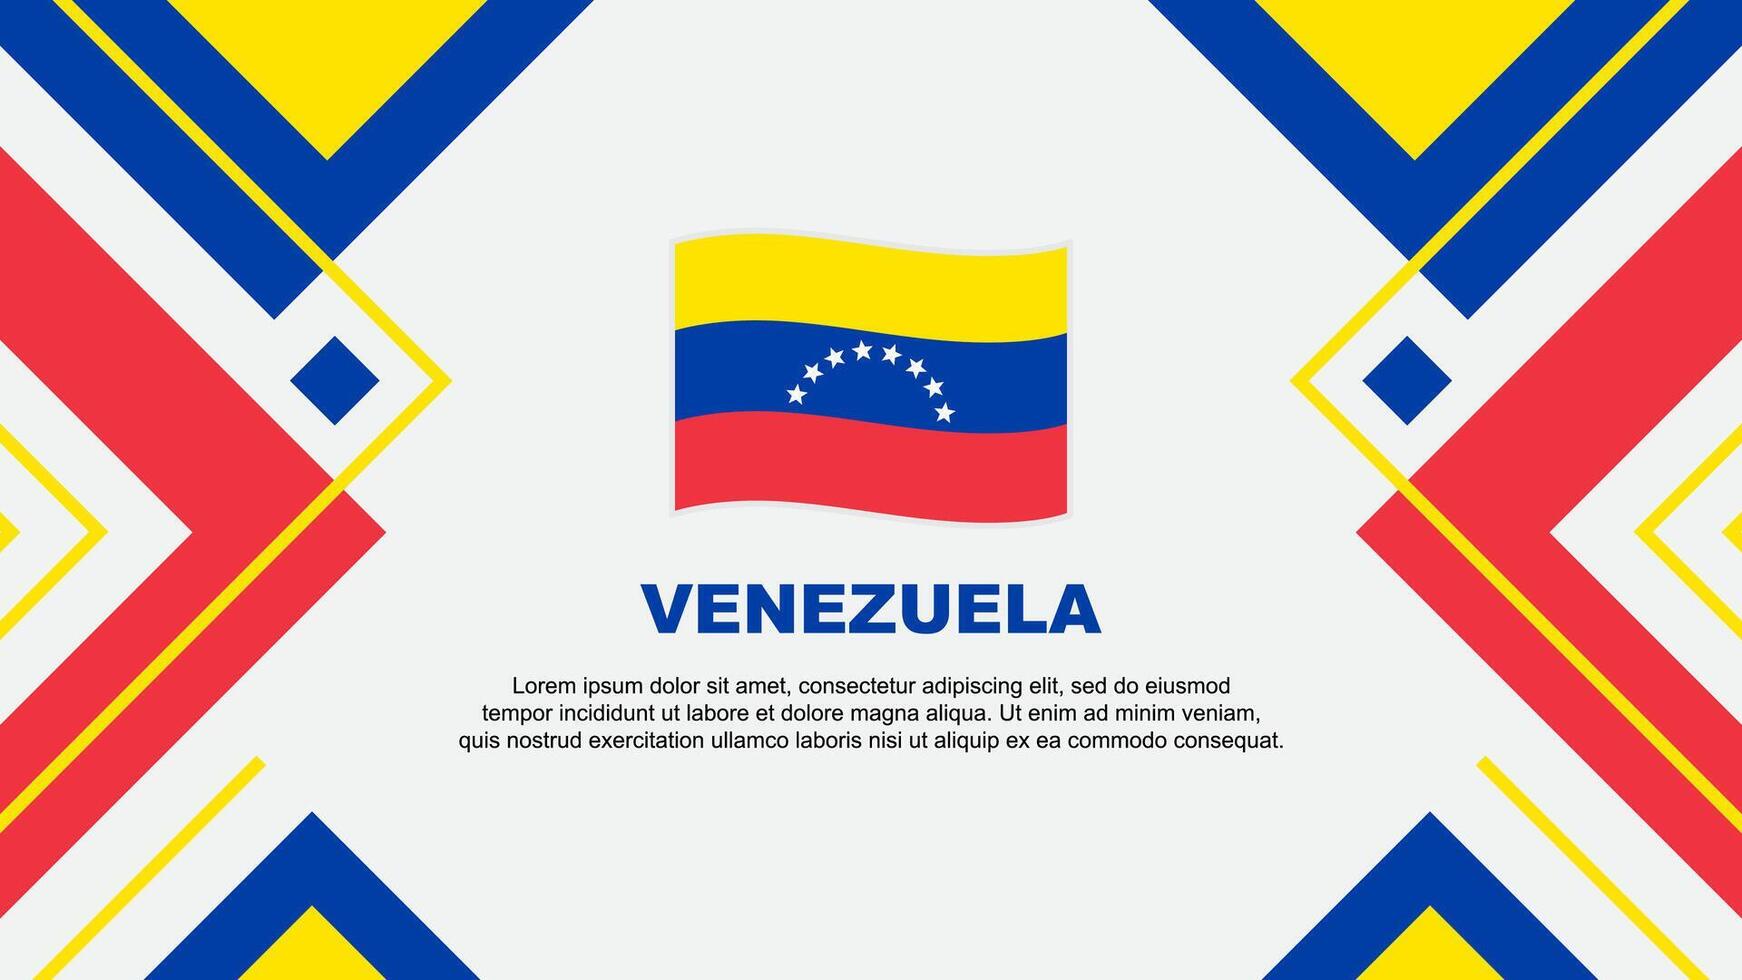 Venezuela Flag Abstract Background Design Template. Venezuela Independence Day Banner Wallpaper Vector Illustration. Venezuela Illustration